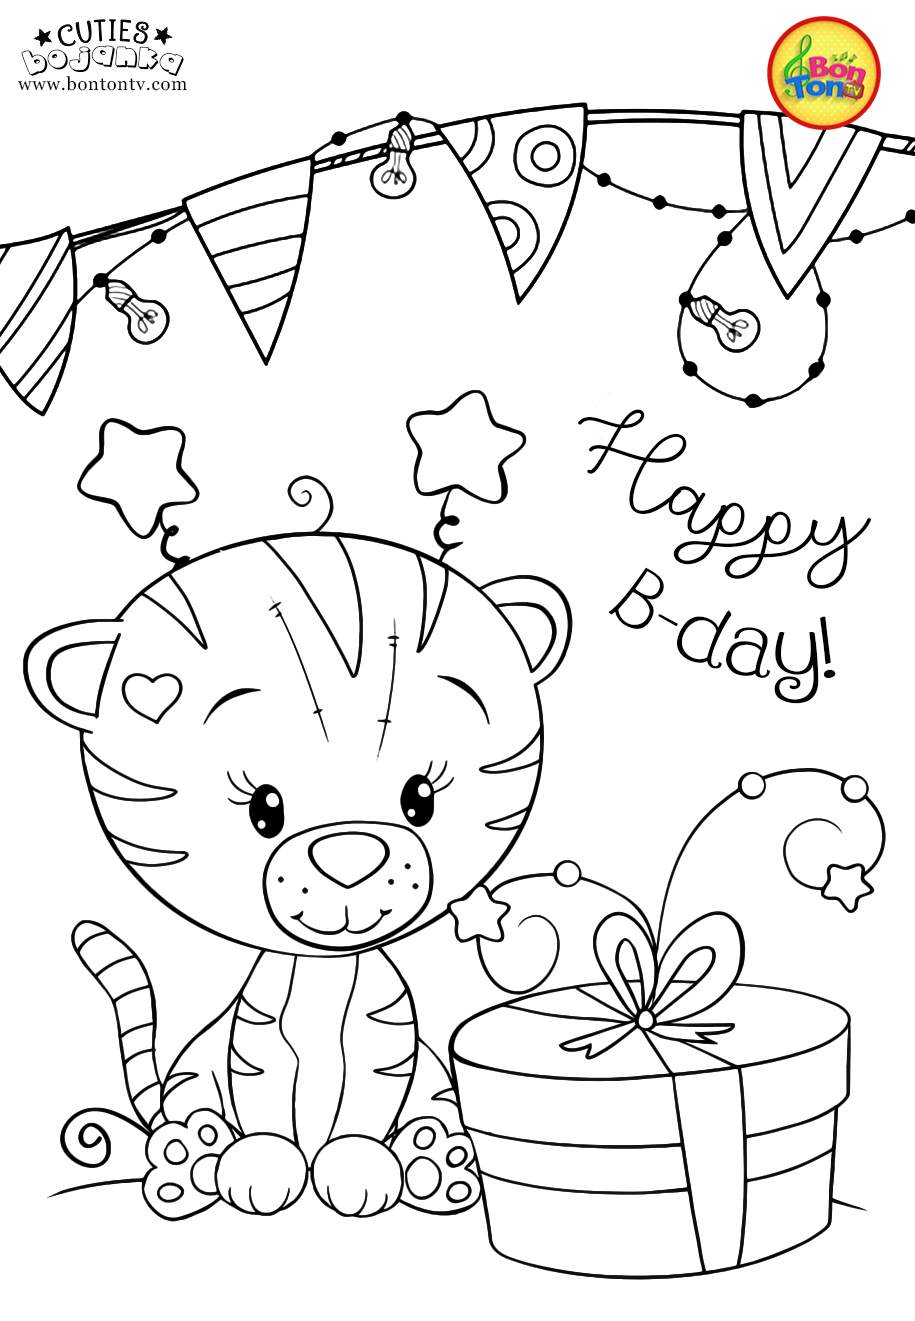 Cuties Coloring Pages For Kids Free Preschool Printables Slatkice Bojanke Cute Animal Coloring Books By Bonton Tv Col Kleurplaten Digi Stempels Patronen